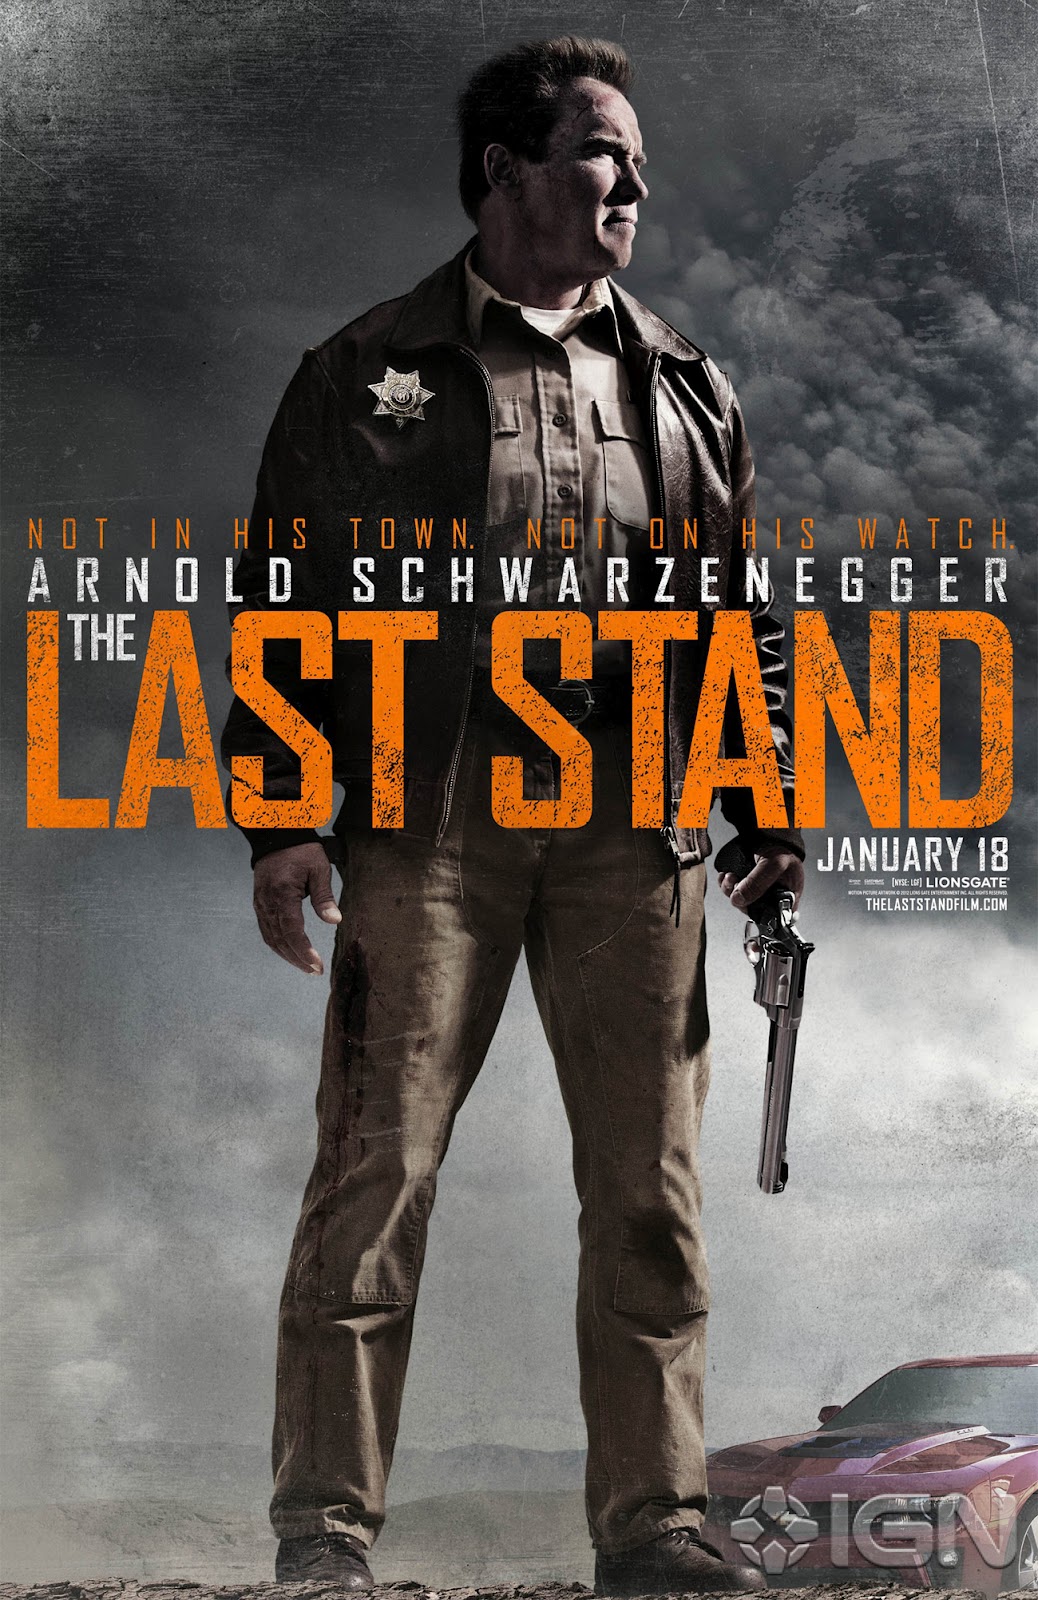 ｃｉａ こちら映画中央情報局です The Last Stand アーノルド シュワルツェネッガーと 悪魔を見た のキム ジウン監督がコンビを組んだアクション ムービー ザ ラスト スタンド が予告編を初公開